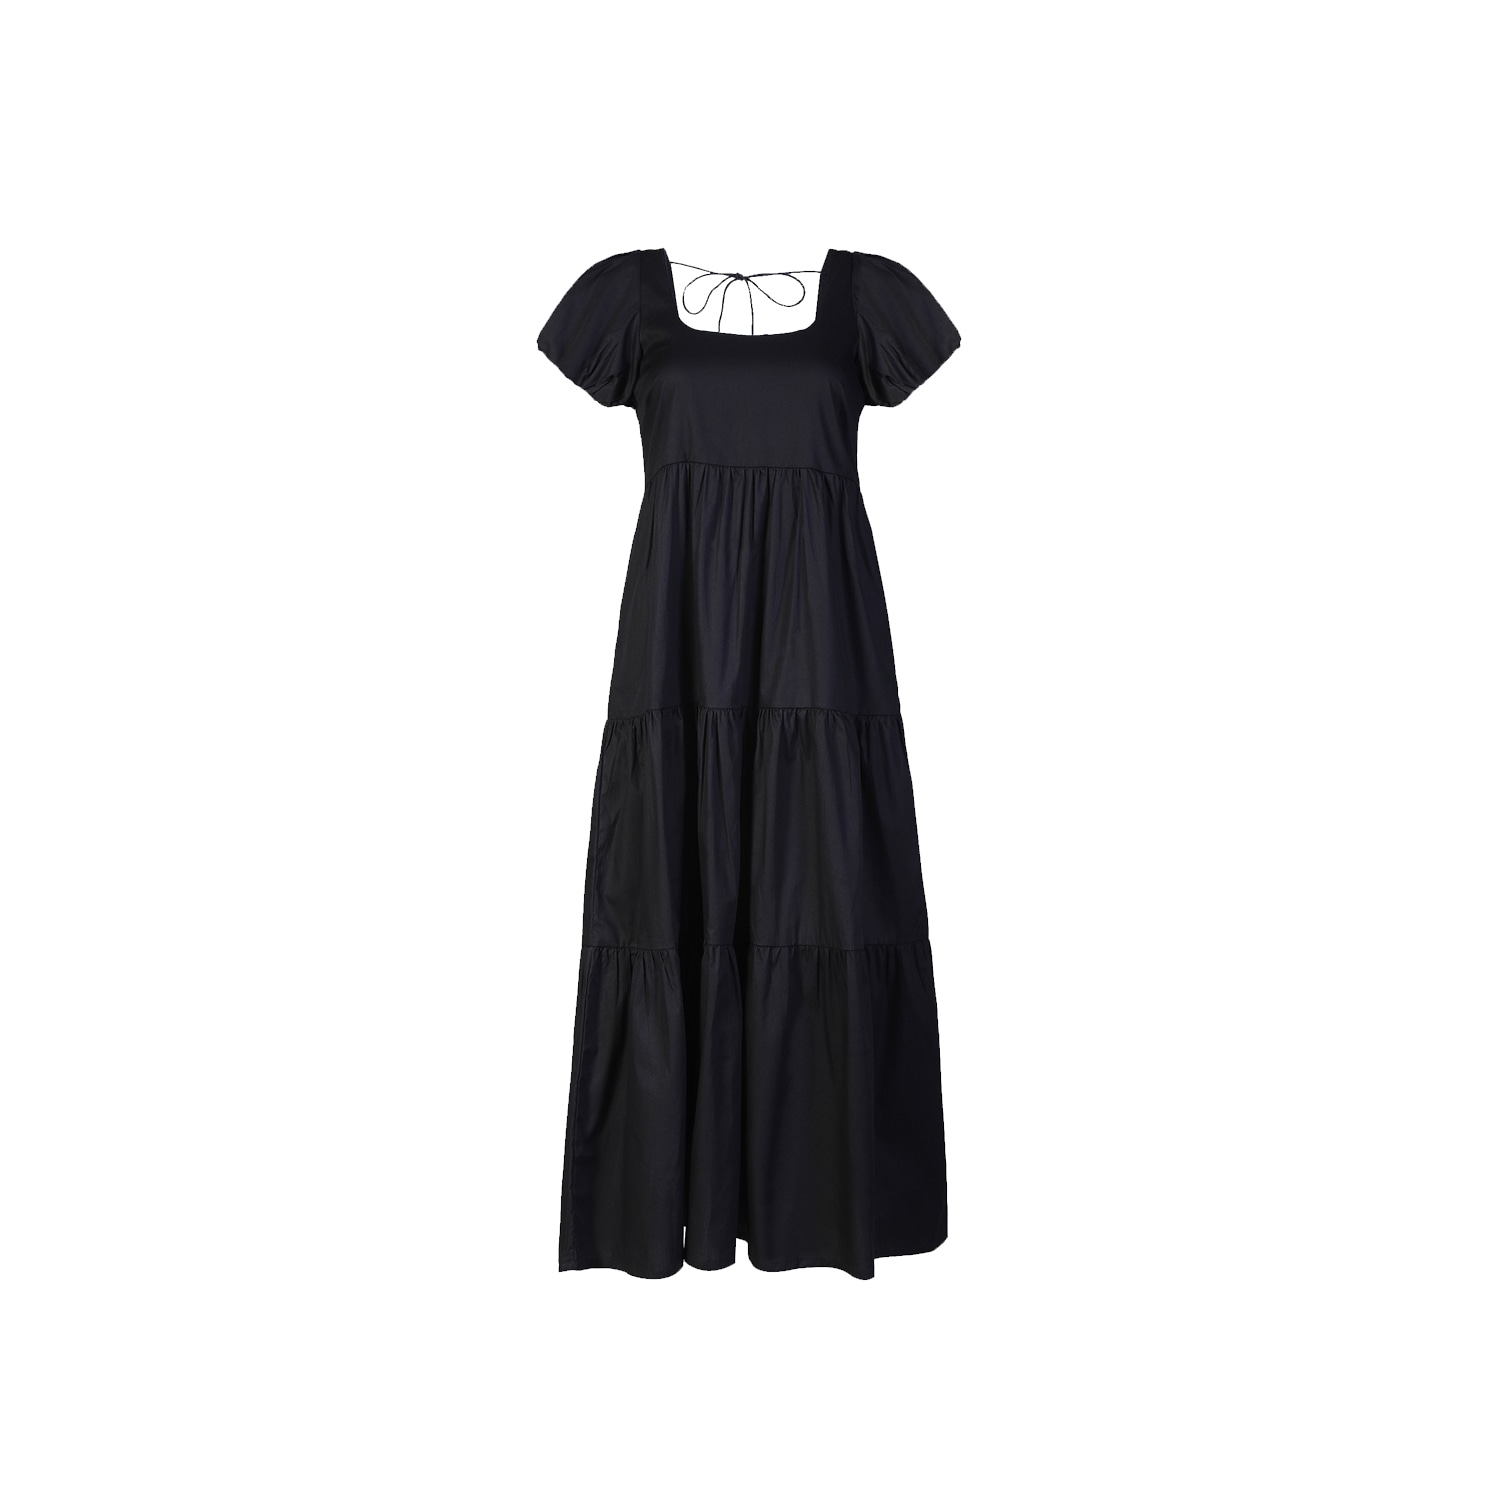 Reistor Women's Puff Sleeve Tiered Black Maxi Dress